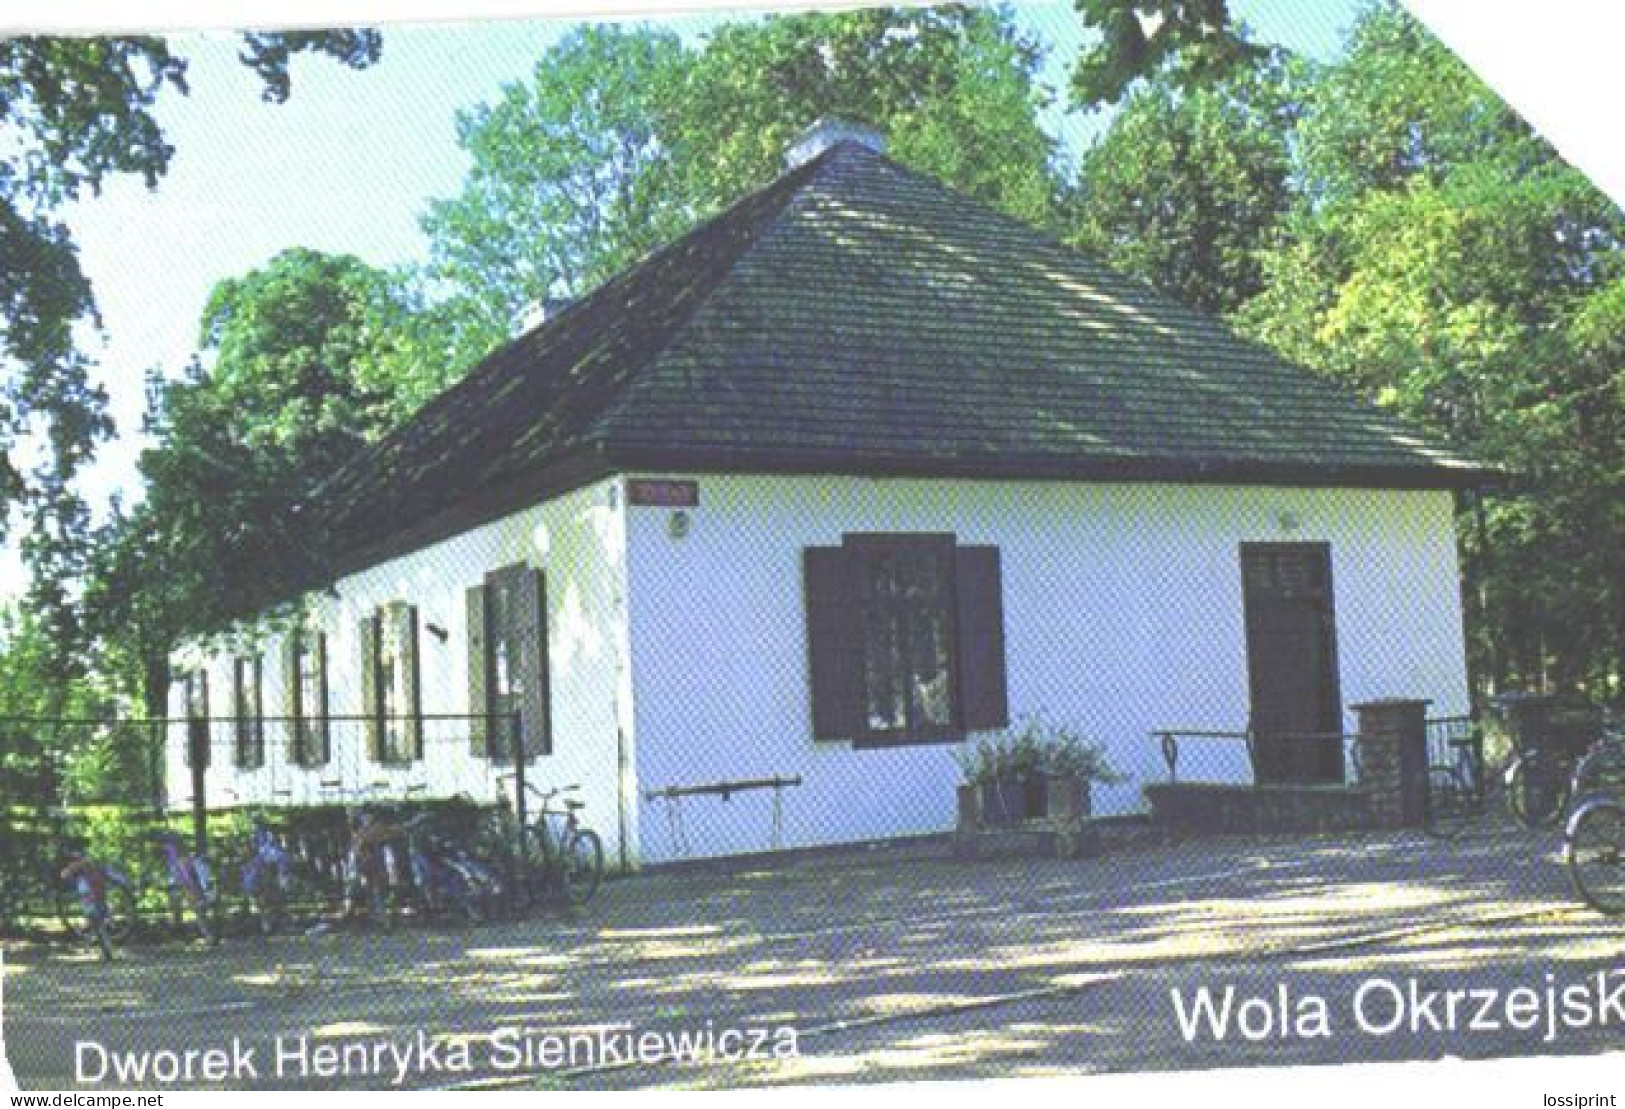 Poland:Used Phonecard, Telekomunikacja Polska S.A., 25 Units, Henryka Sienkiewicza Building - Landscapes